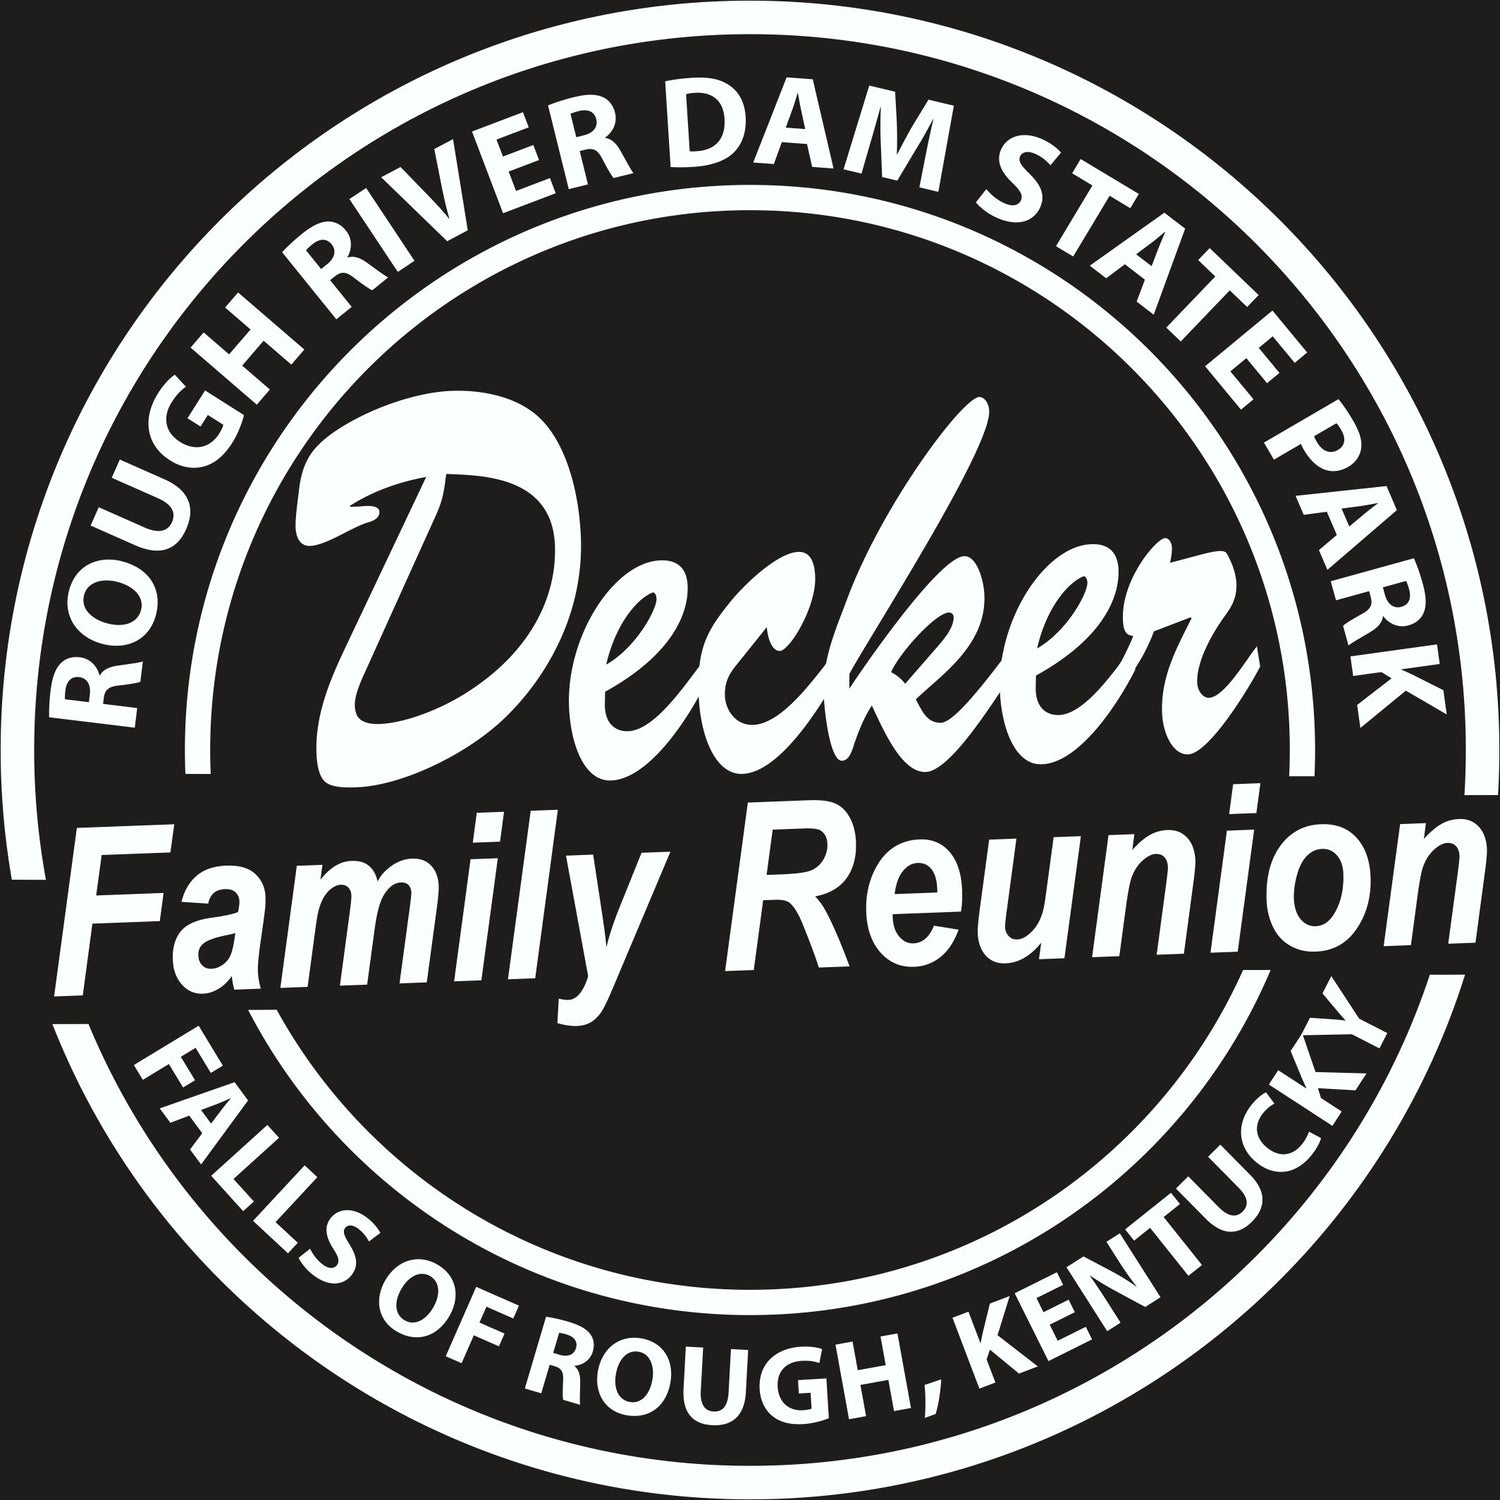 Decker Family Reunion